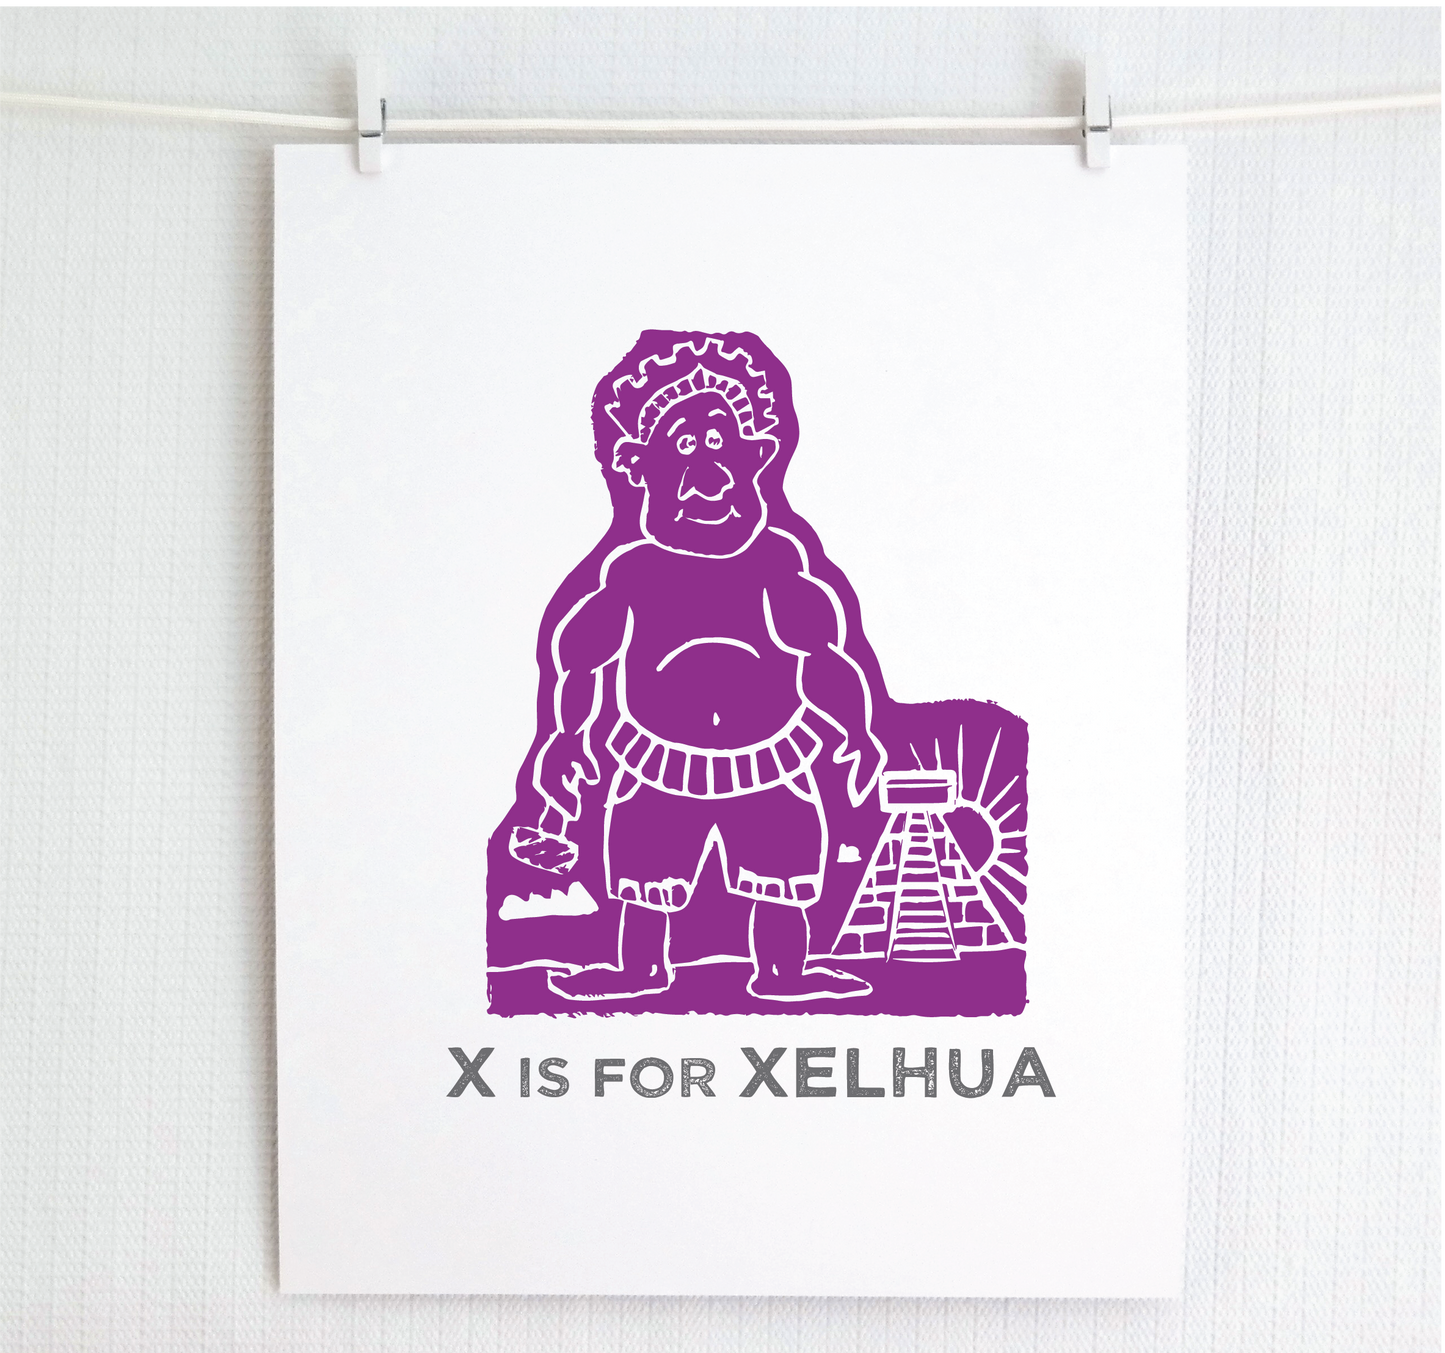 X is for Xelhua